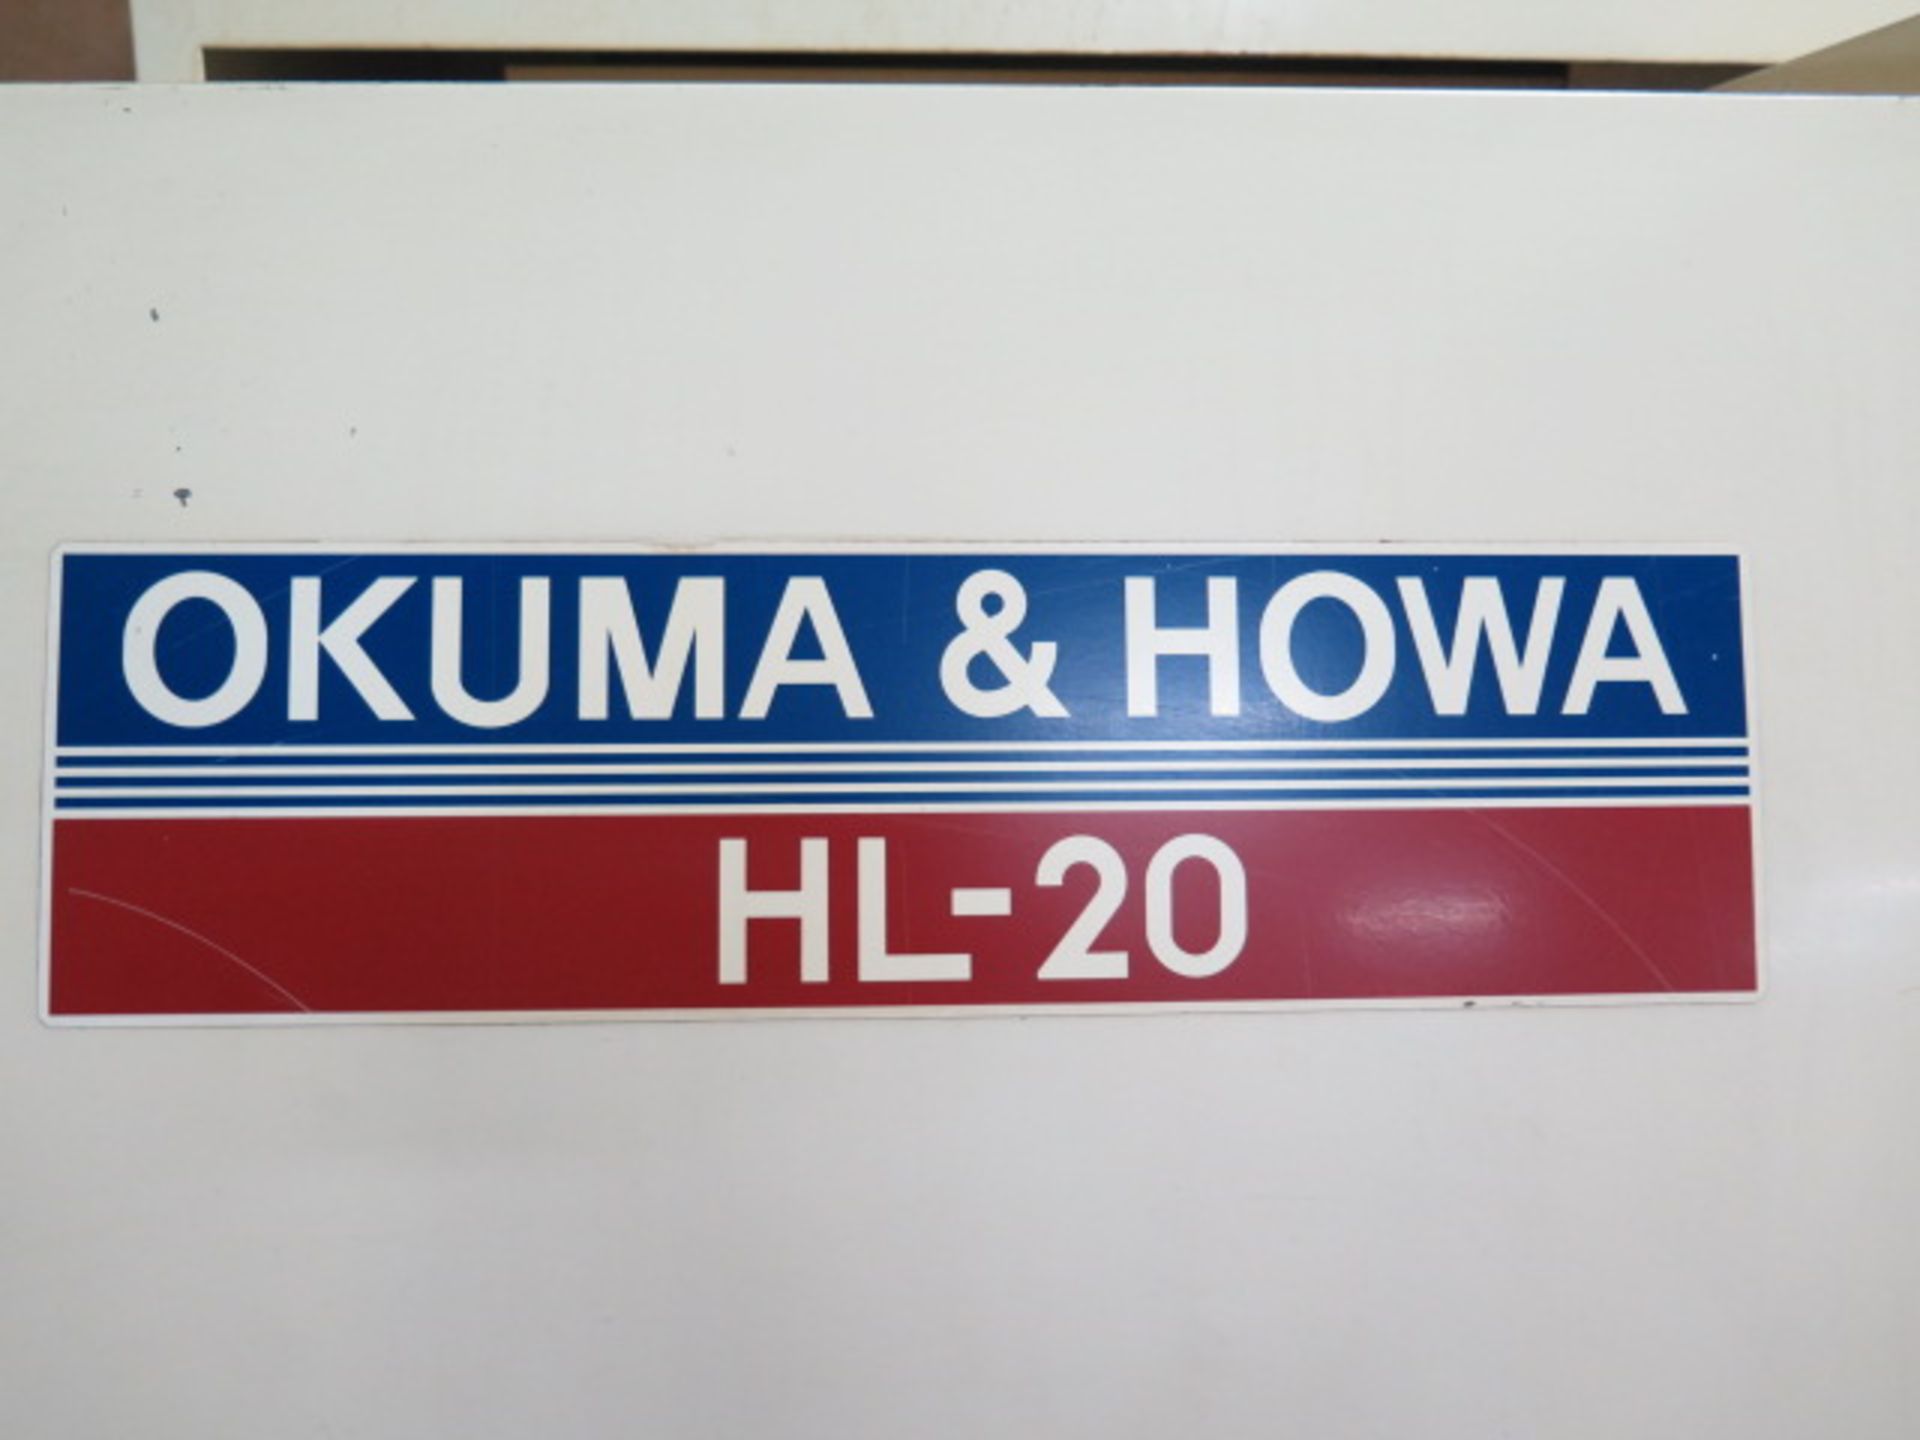 Okuma & Howa HL-20 CNC Turning Center s/n 00888 w/ Fanuc 18i-T Controls, 12-Station, SOLD AS IS - Bild 11 aus 12